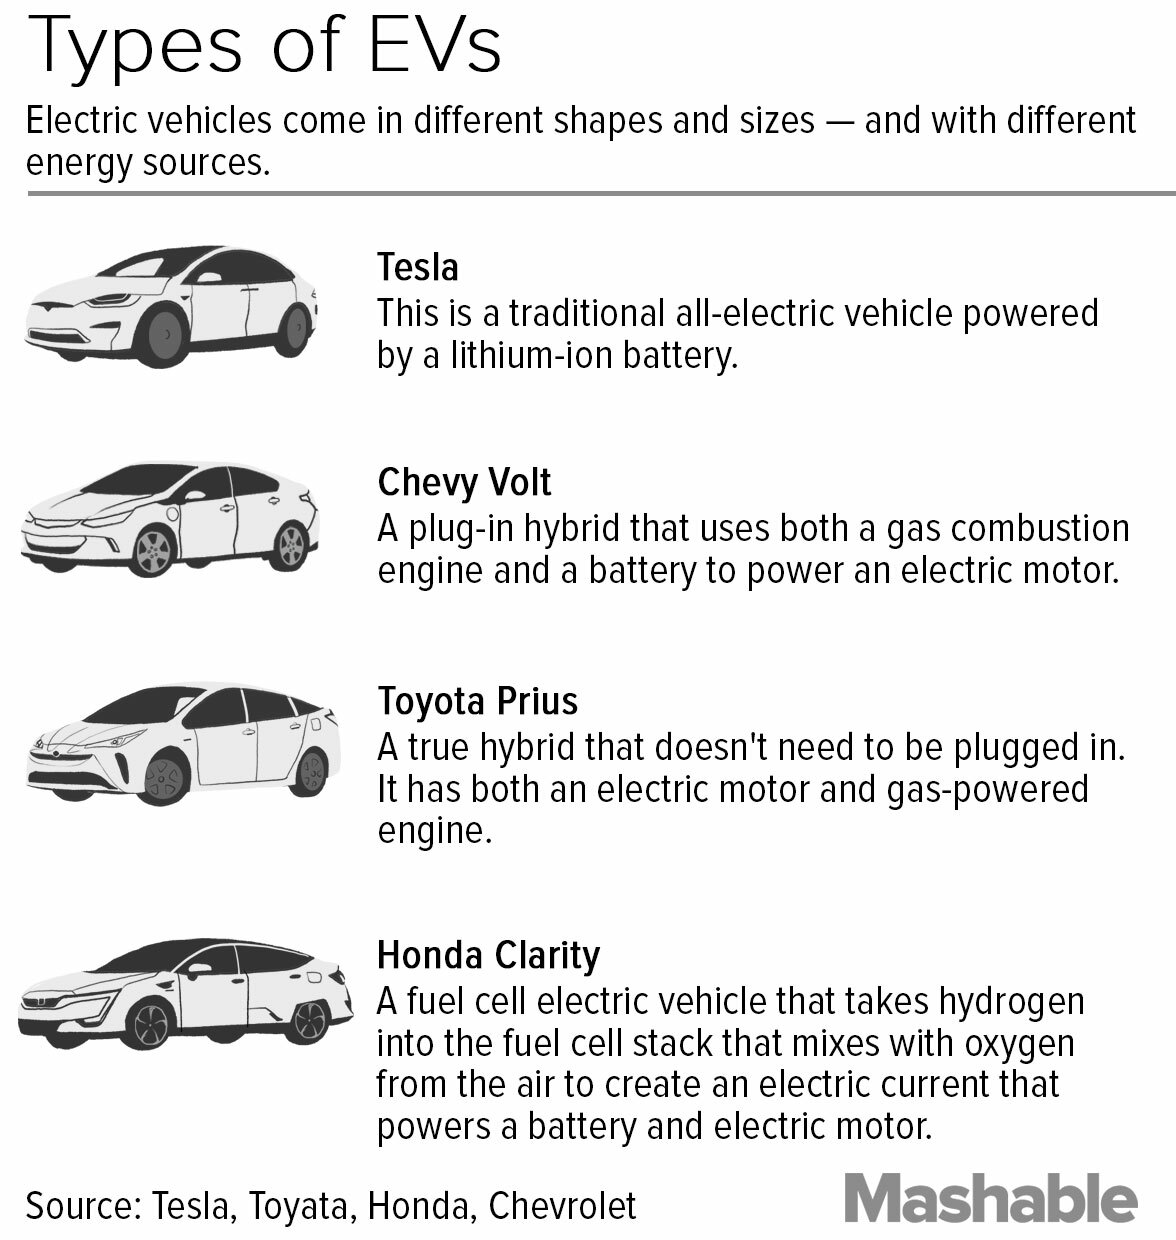 Types of EVs.